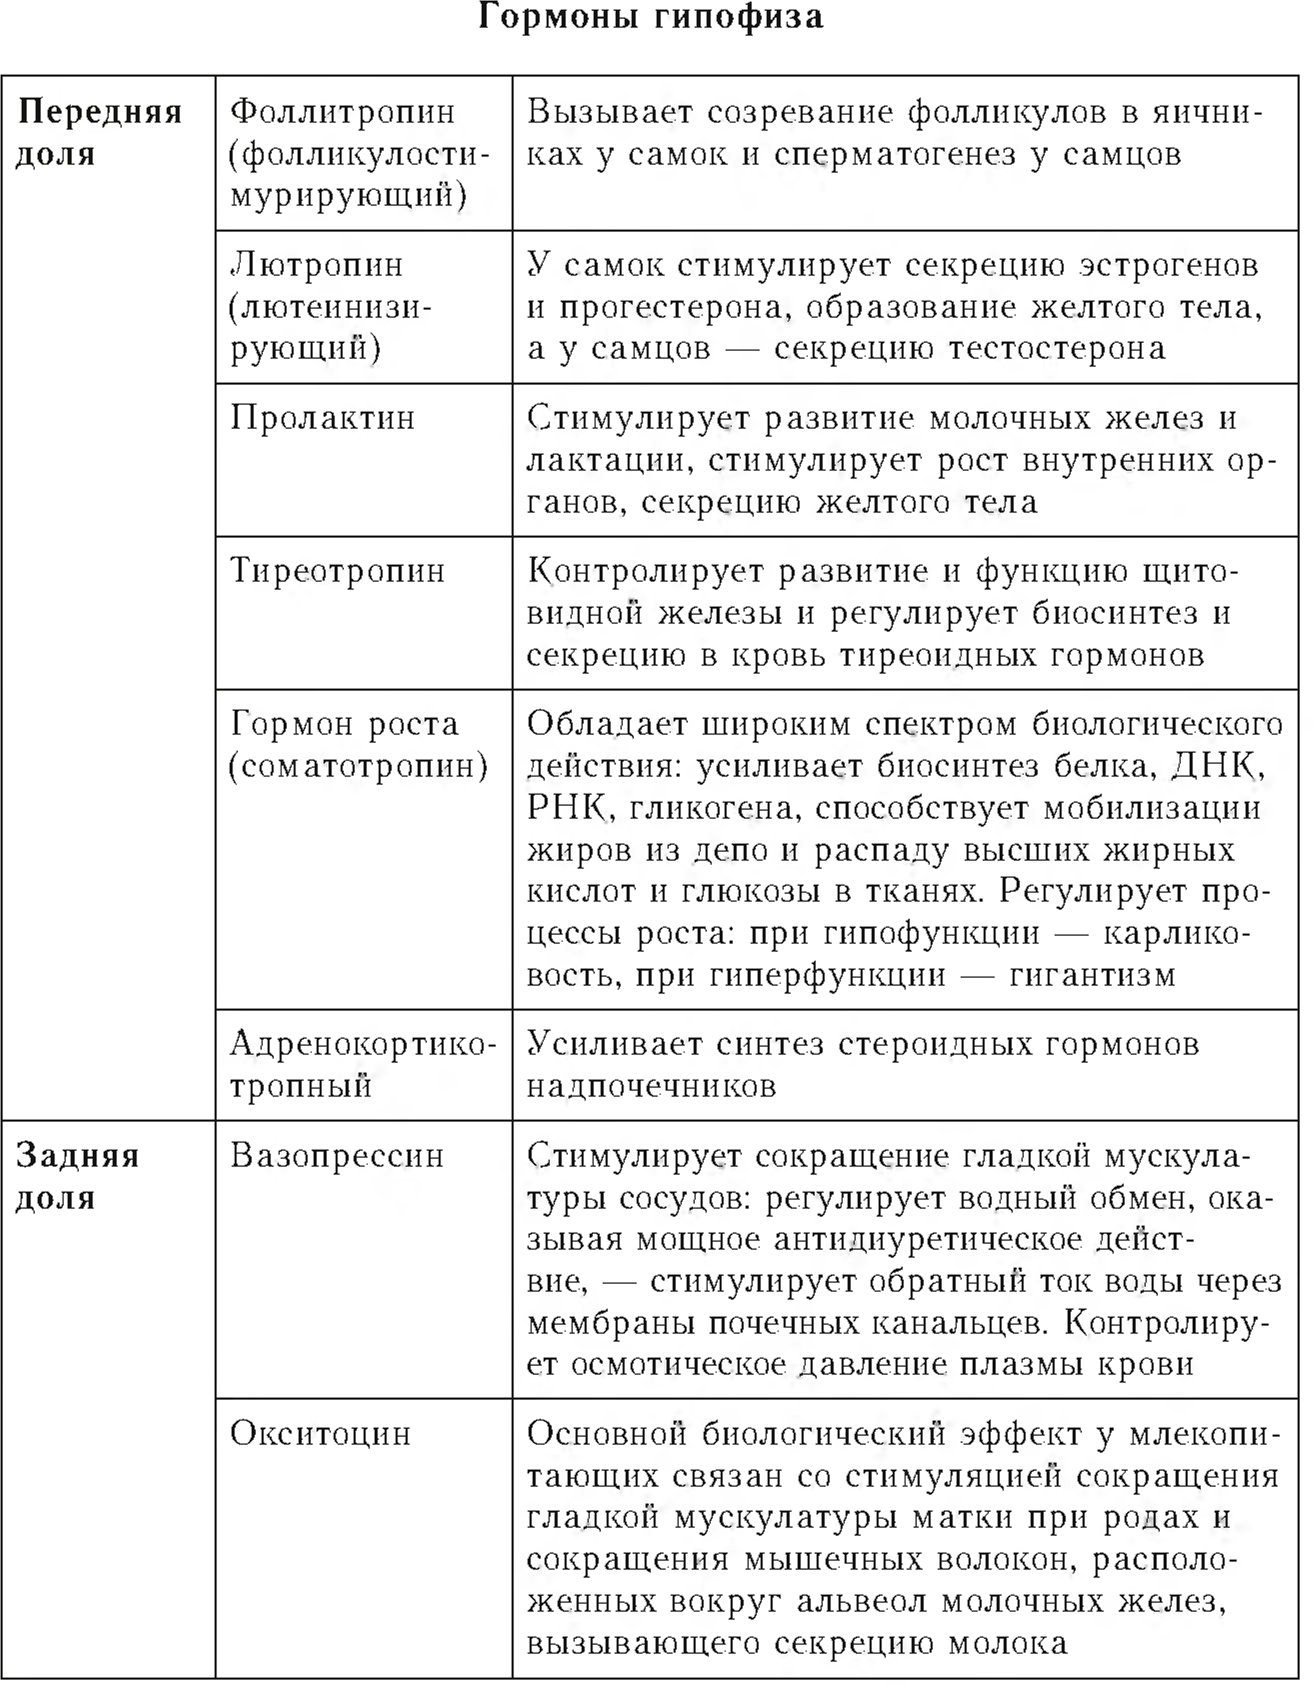 Гормоны гипофиза (фоллитропин, лютропин, пролактин, теориотропин, соматотропин, вазопрессин, окситоц